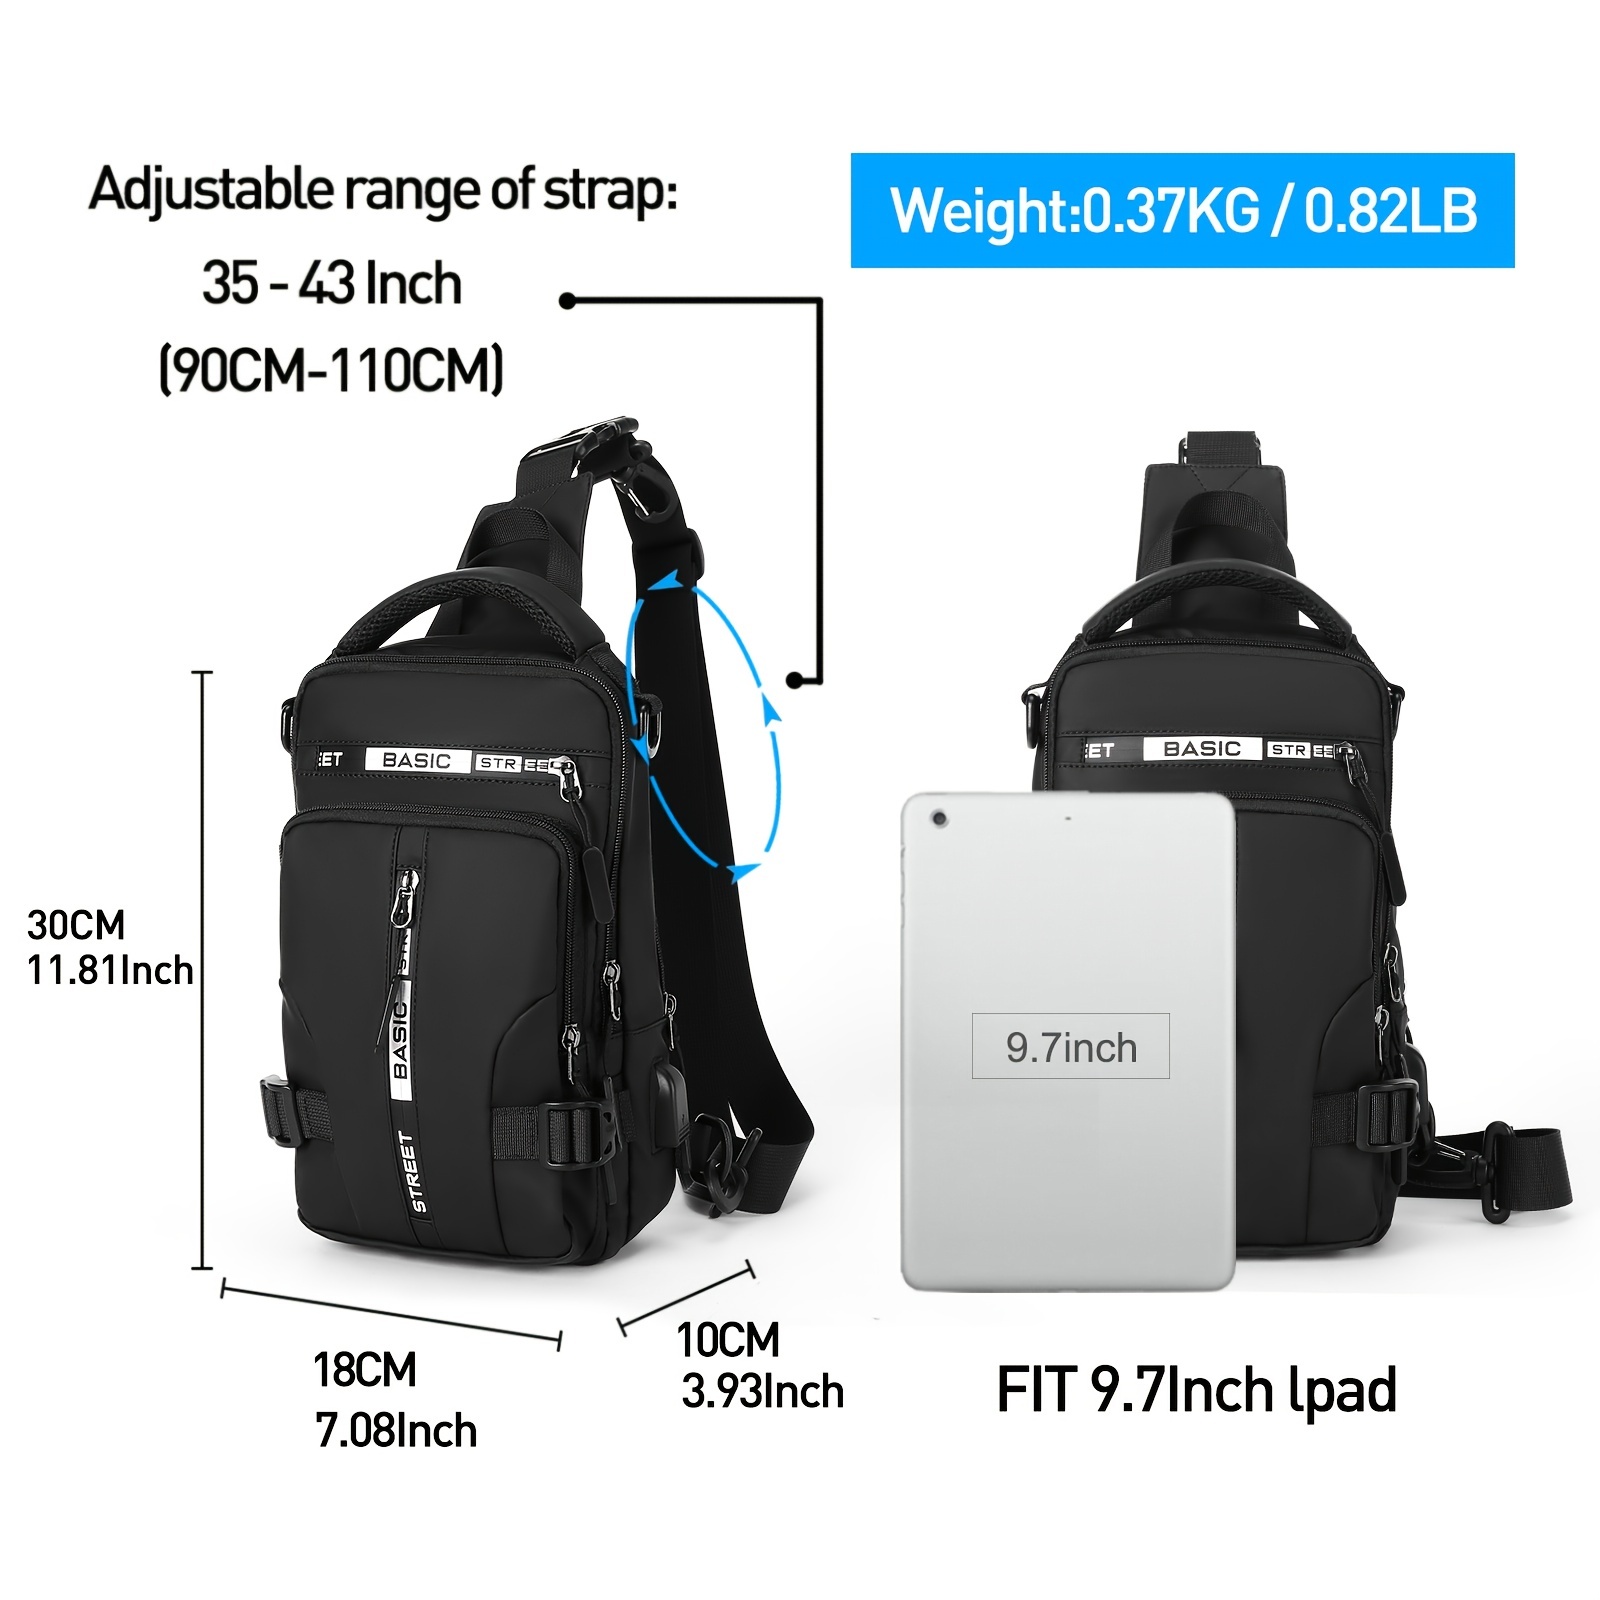 Sling Backpack with USB Charging Port, Chest Bag Crossbody Daypack Shoulder  Bag for Women & Men, Hiking, Cycling, Travel